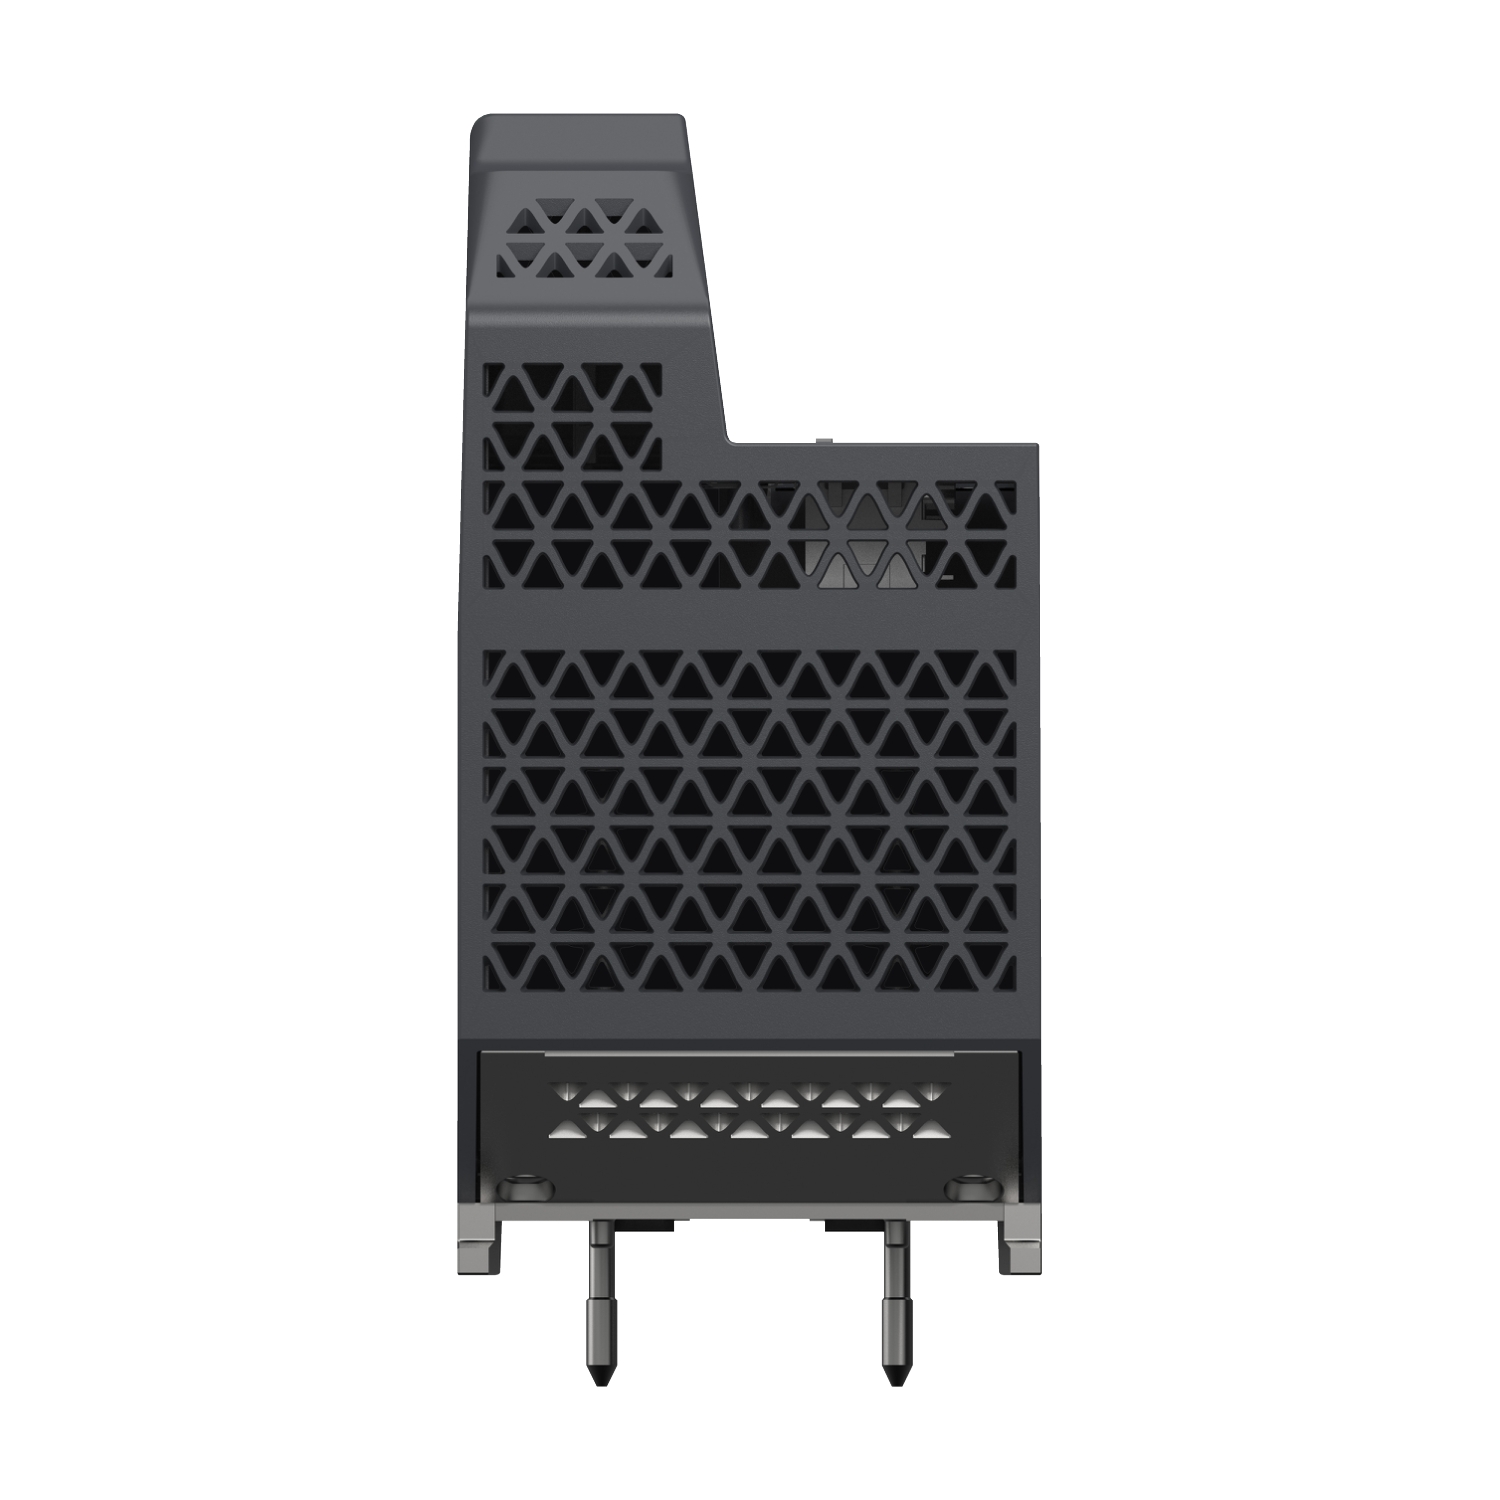 BMECRD0100 - Modicon X80 ERIO アダプター for dPAC | Schneider